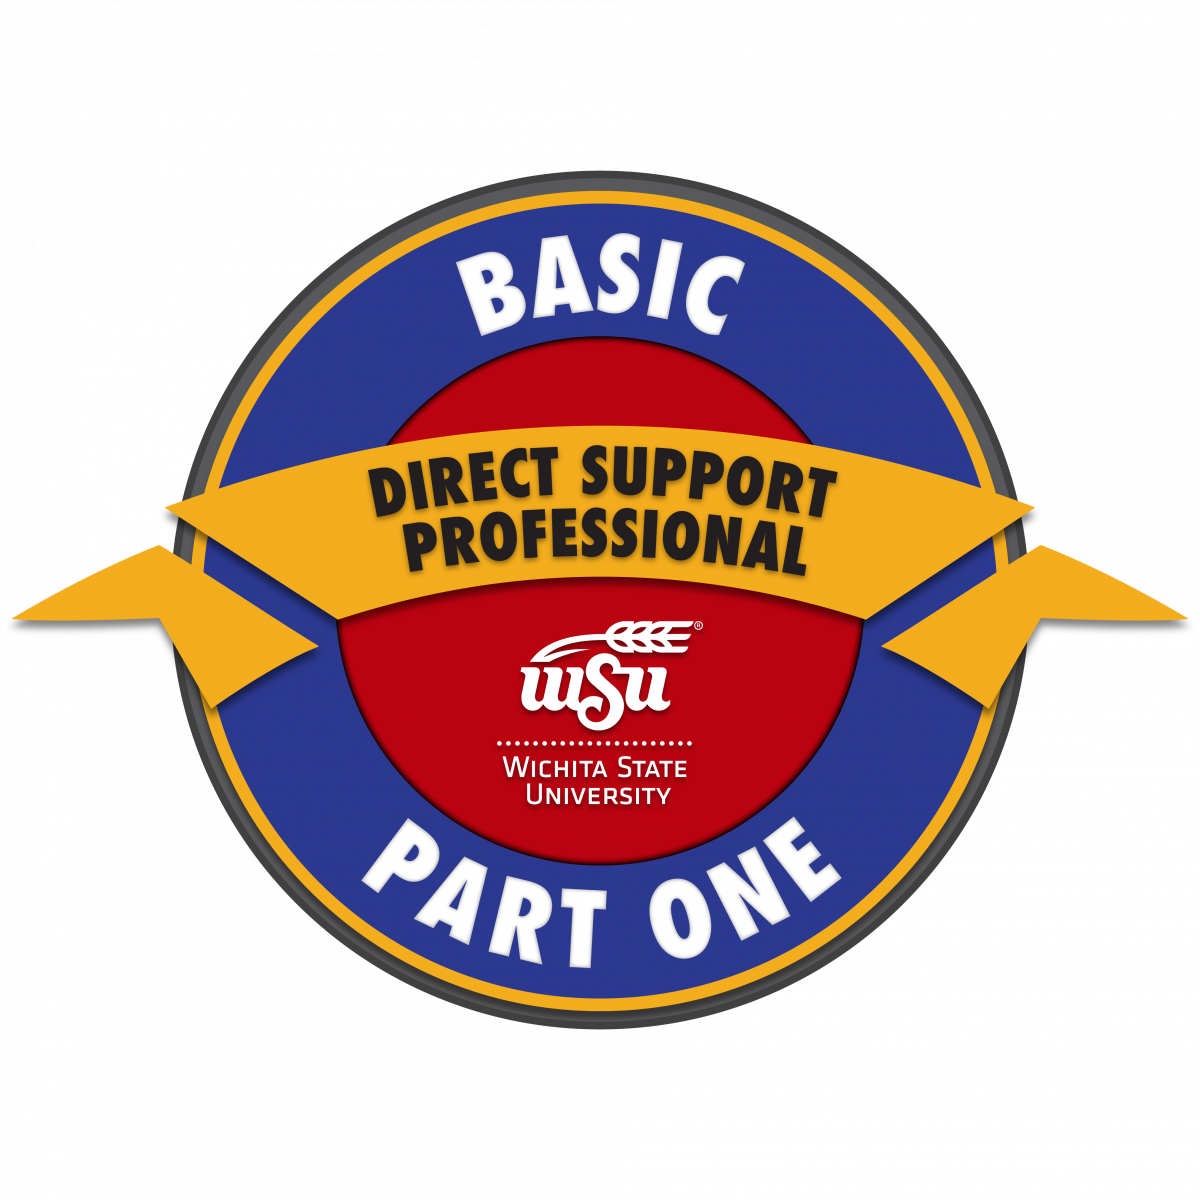 Direct Support Professional Basic Part 1 badge logo